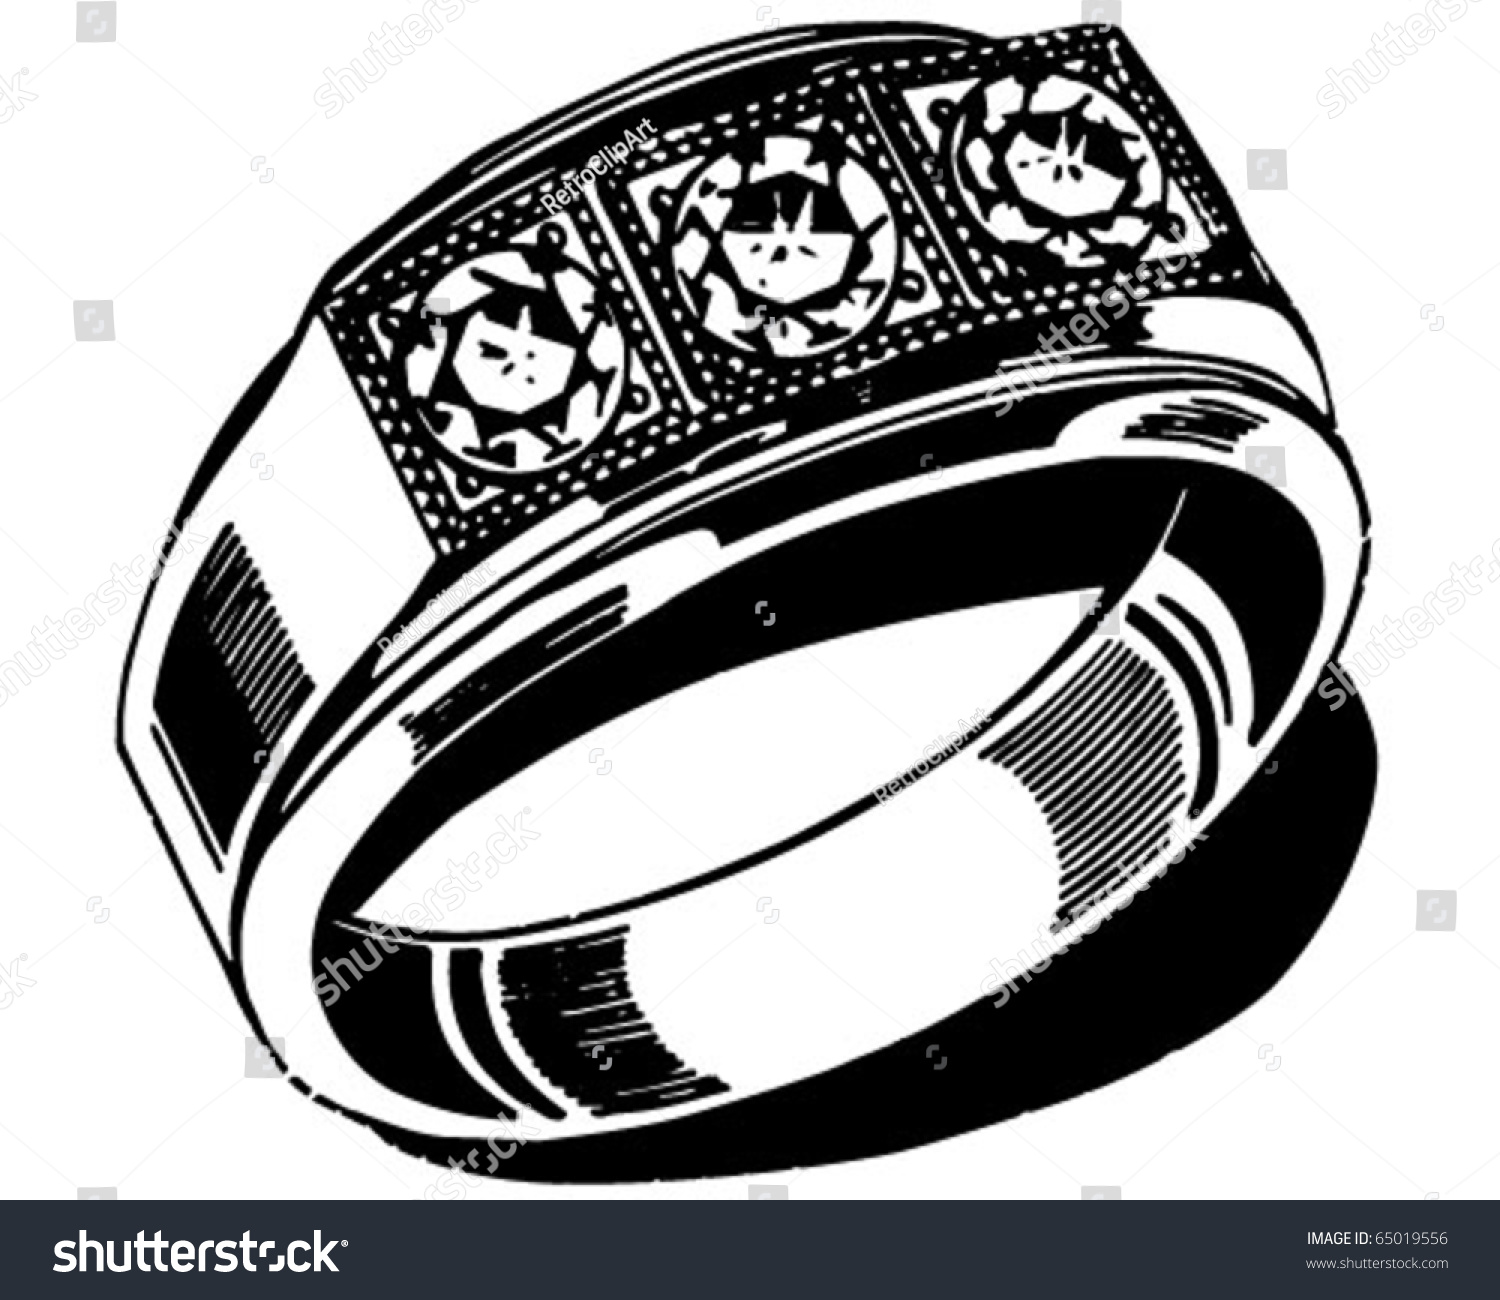 Download Mens Wedding Ring Retro Clipart Illustration Stock Vector ...